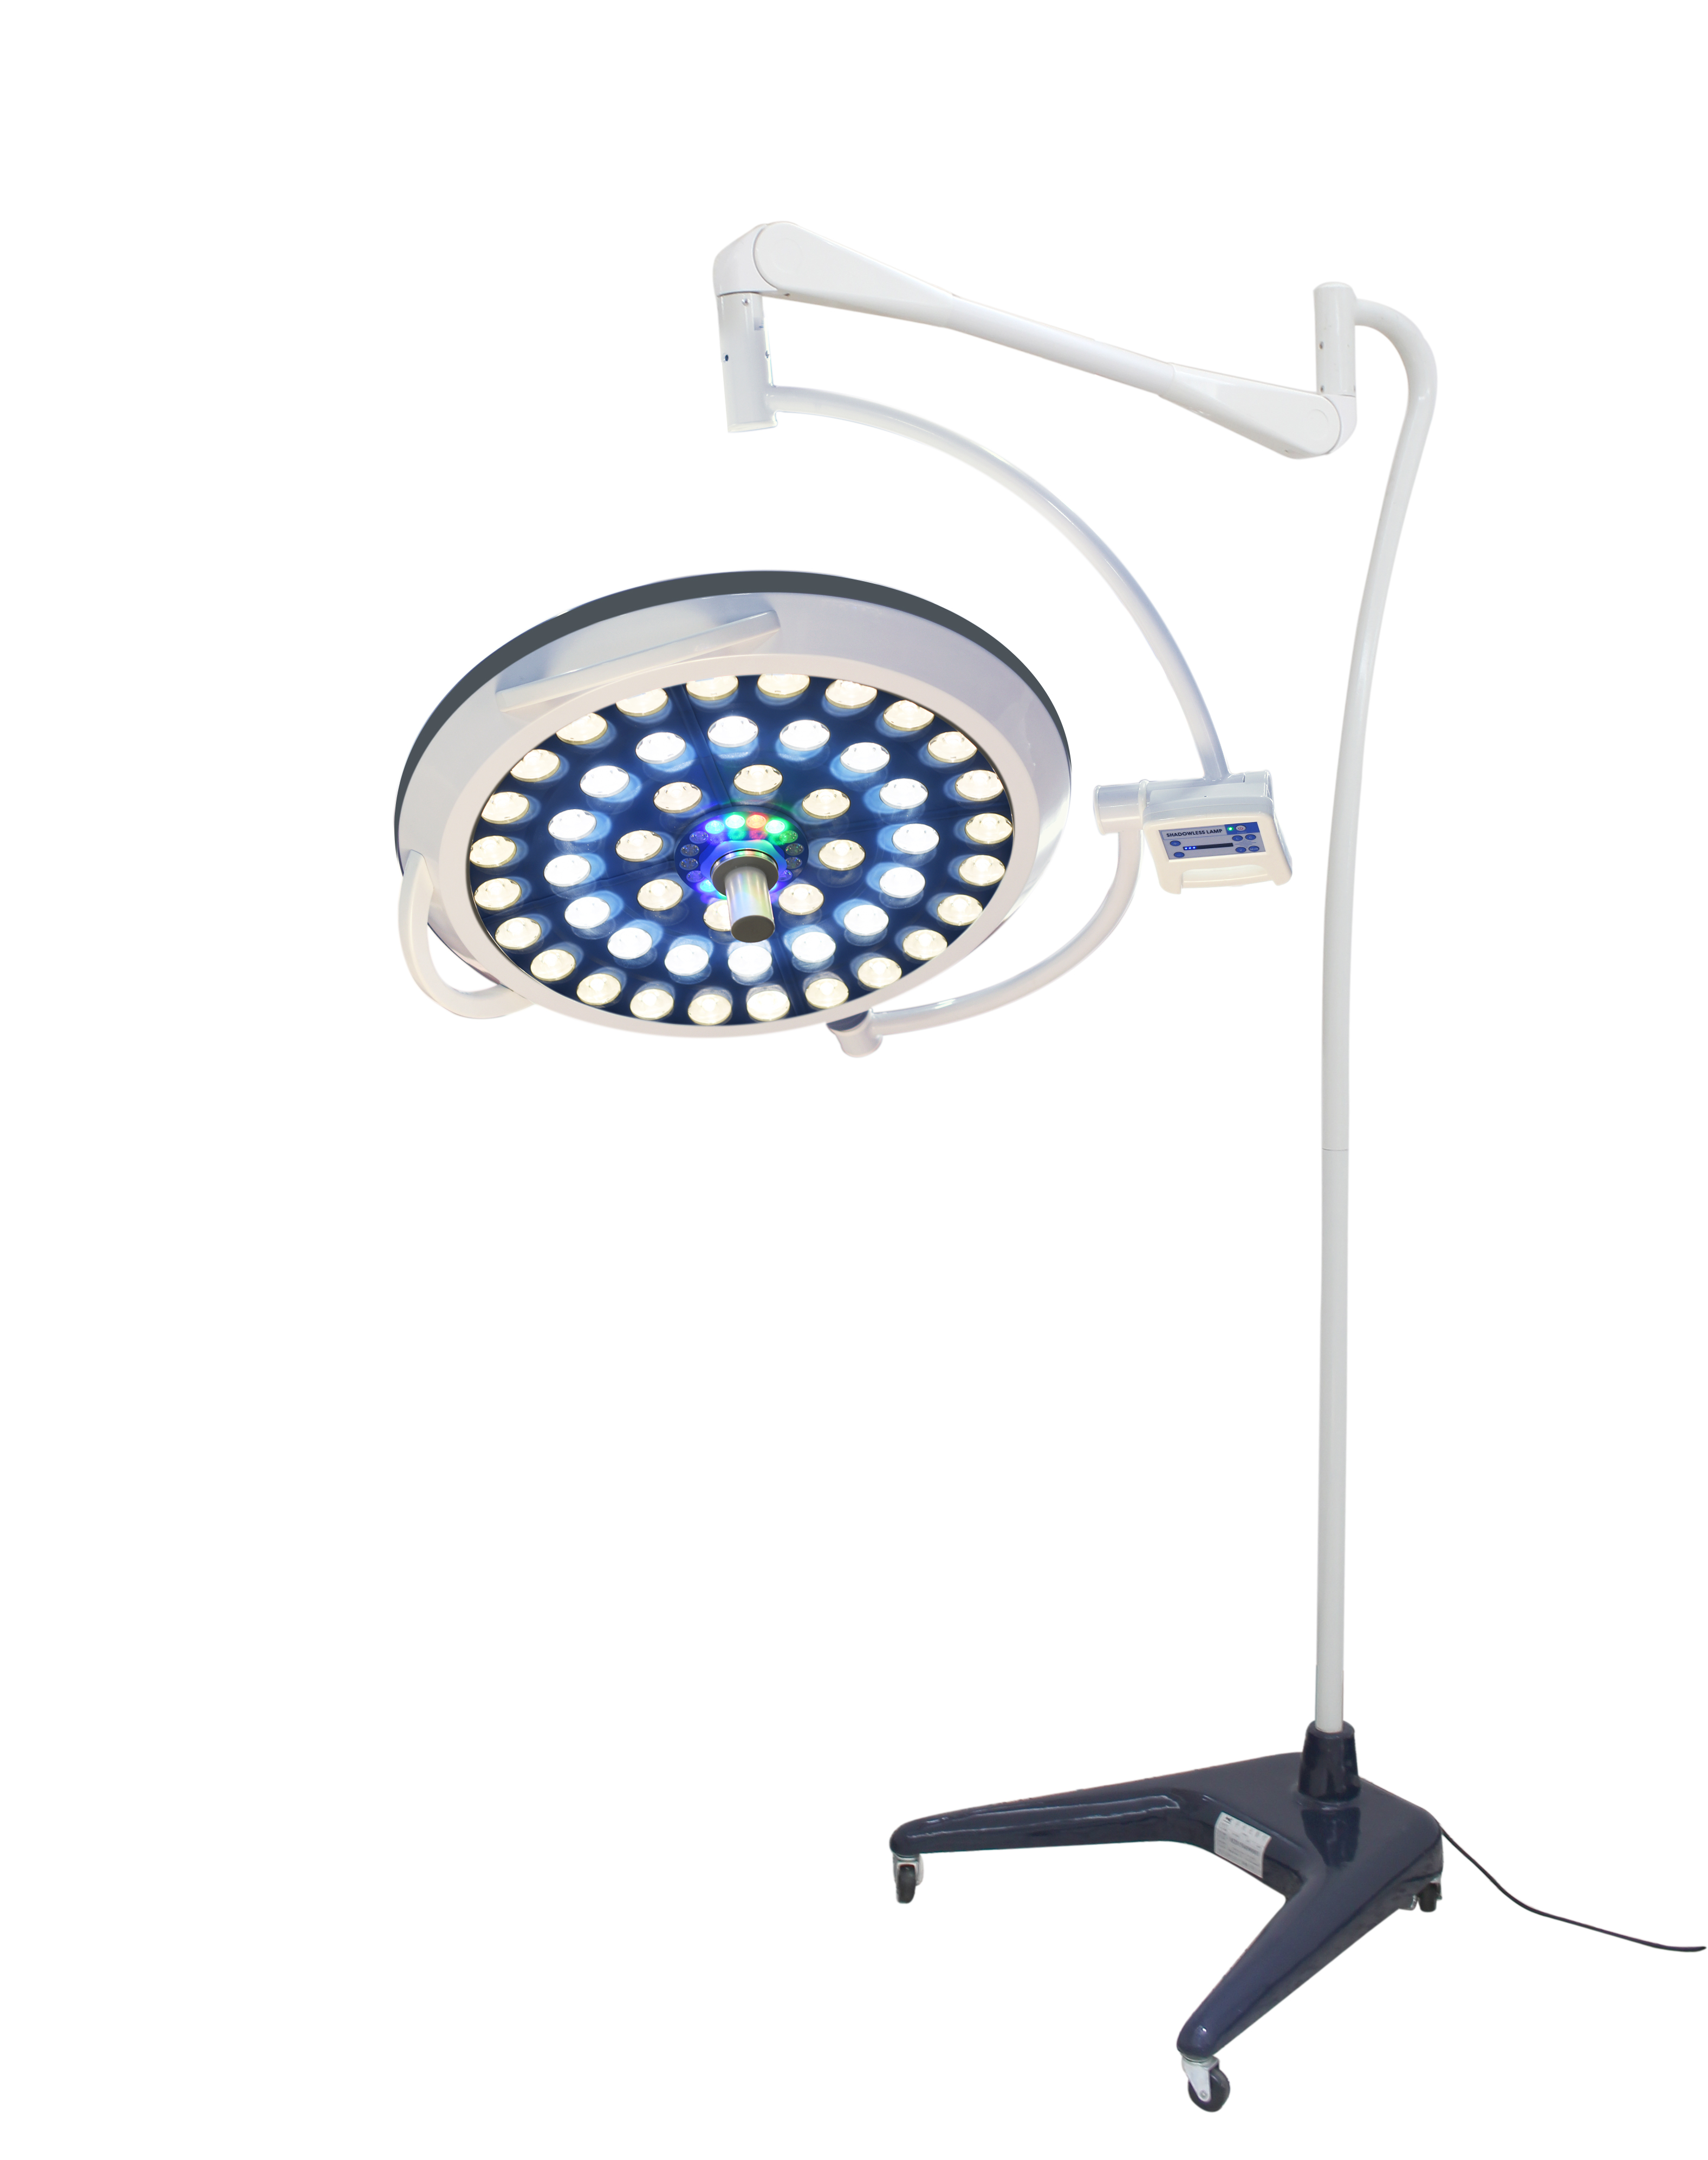 2021 Latest Design Ent Headlights - Medical Surgical Exam Light Mobile Shadowless Lamp Adjustable – Micare